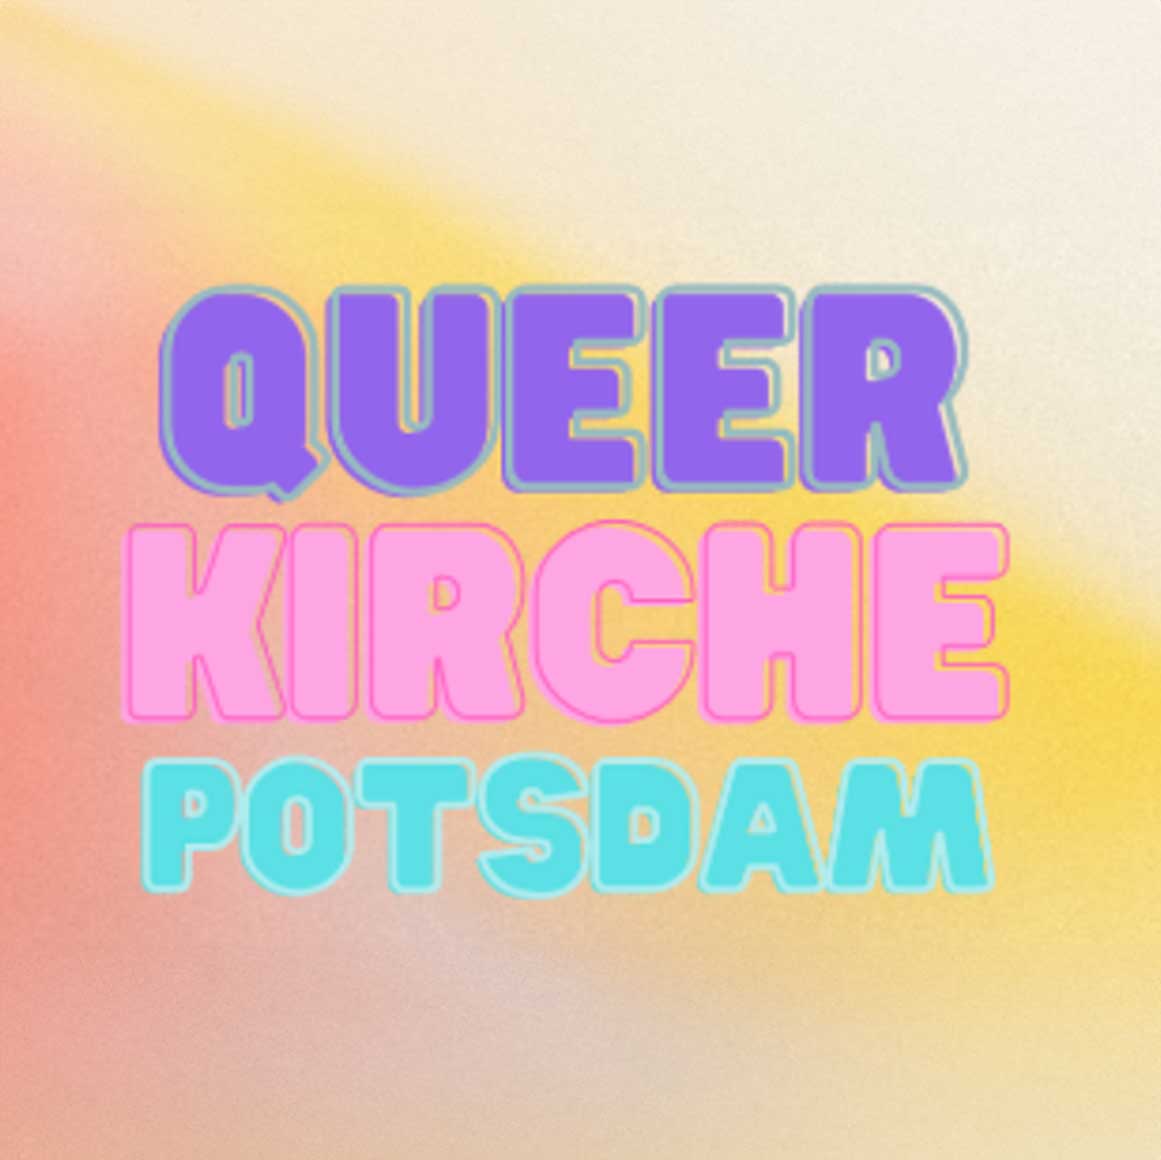 Queer*kirche*potsdam